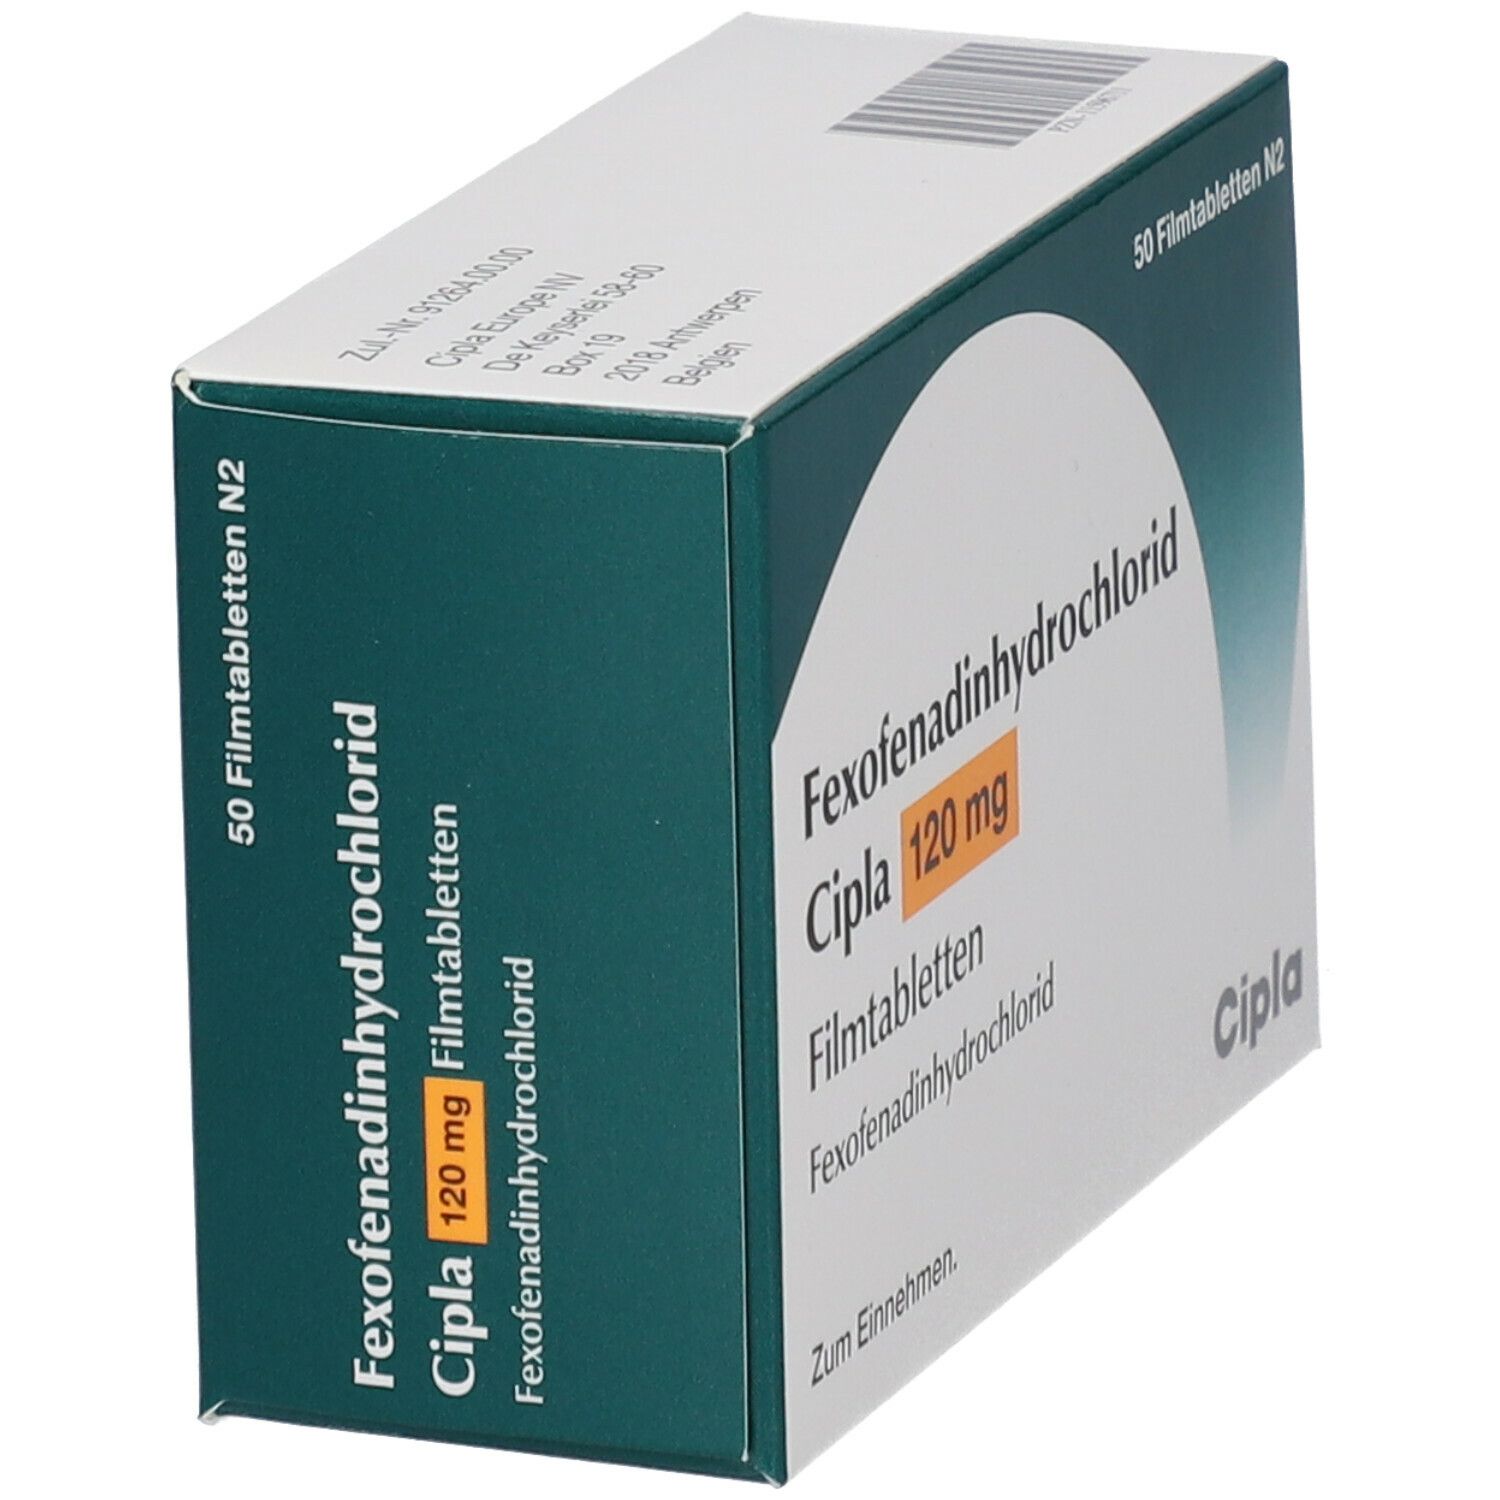 Fexofenadinhydrochlorid Cipla 120 mg